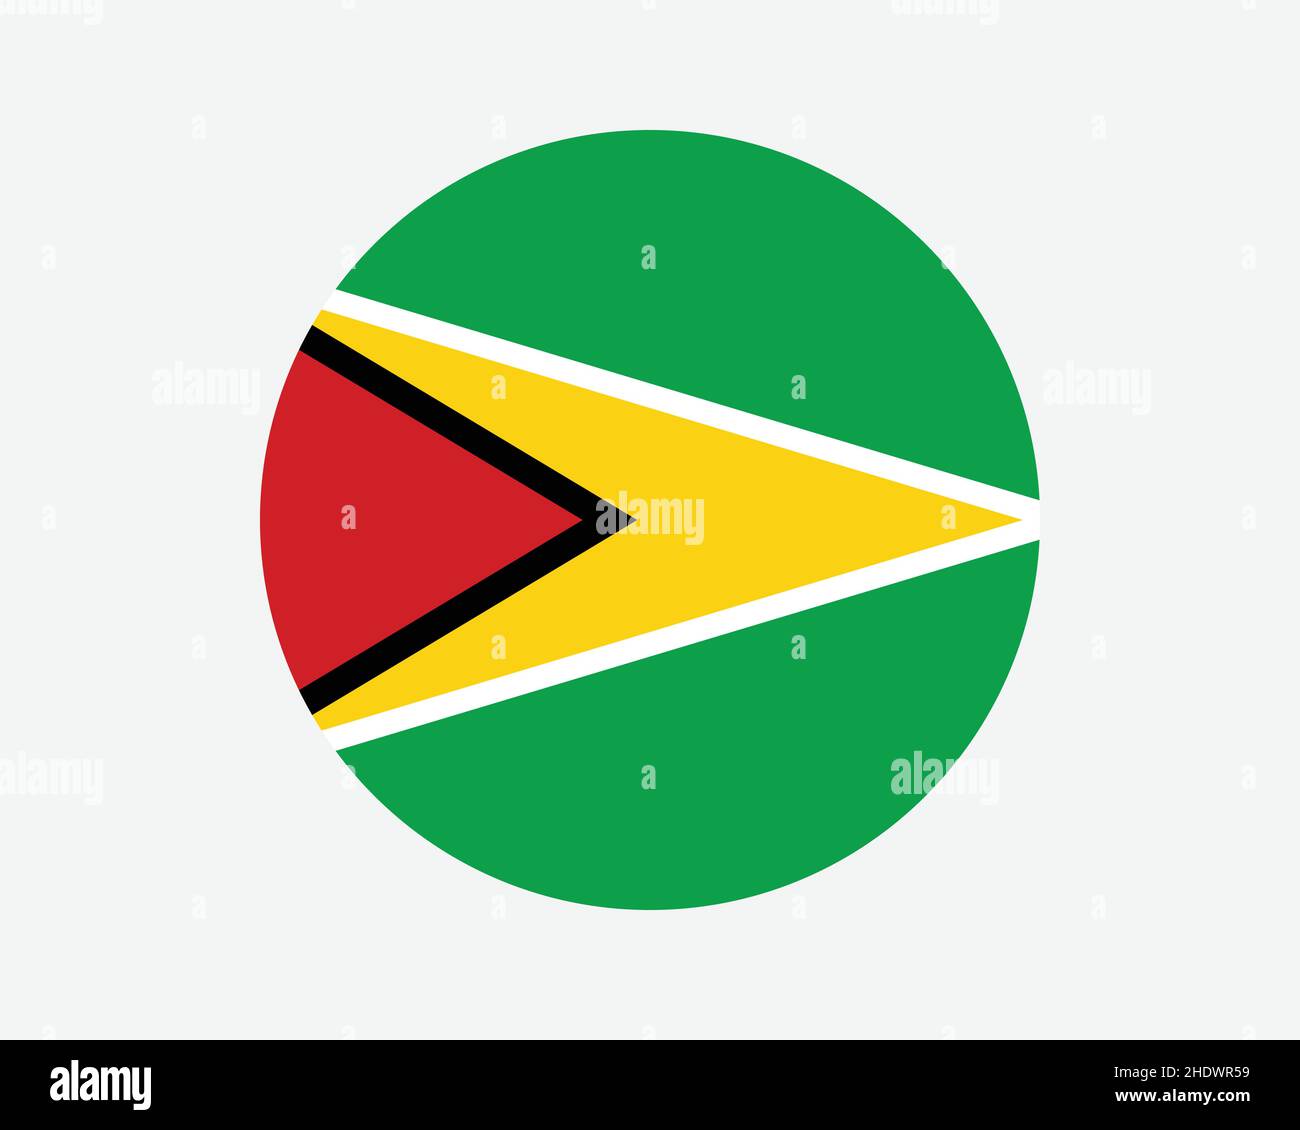 Guyana Round Country Flag. Guyanese Circle National Flag. Co-operative Republic of Guyana Circular Shape Button Banner. EPS Vector Illustration. Stock Vector